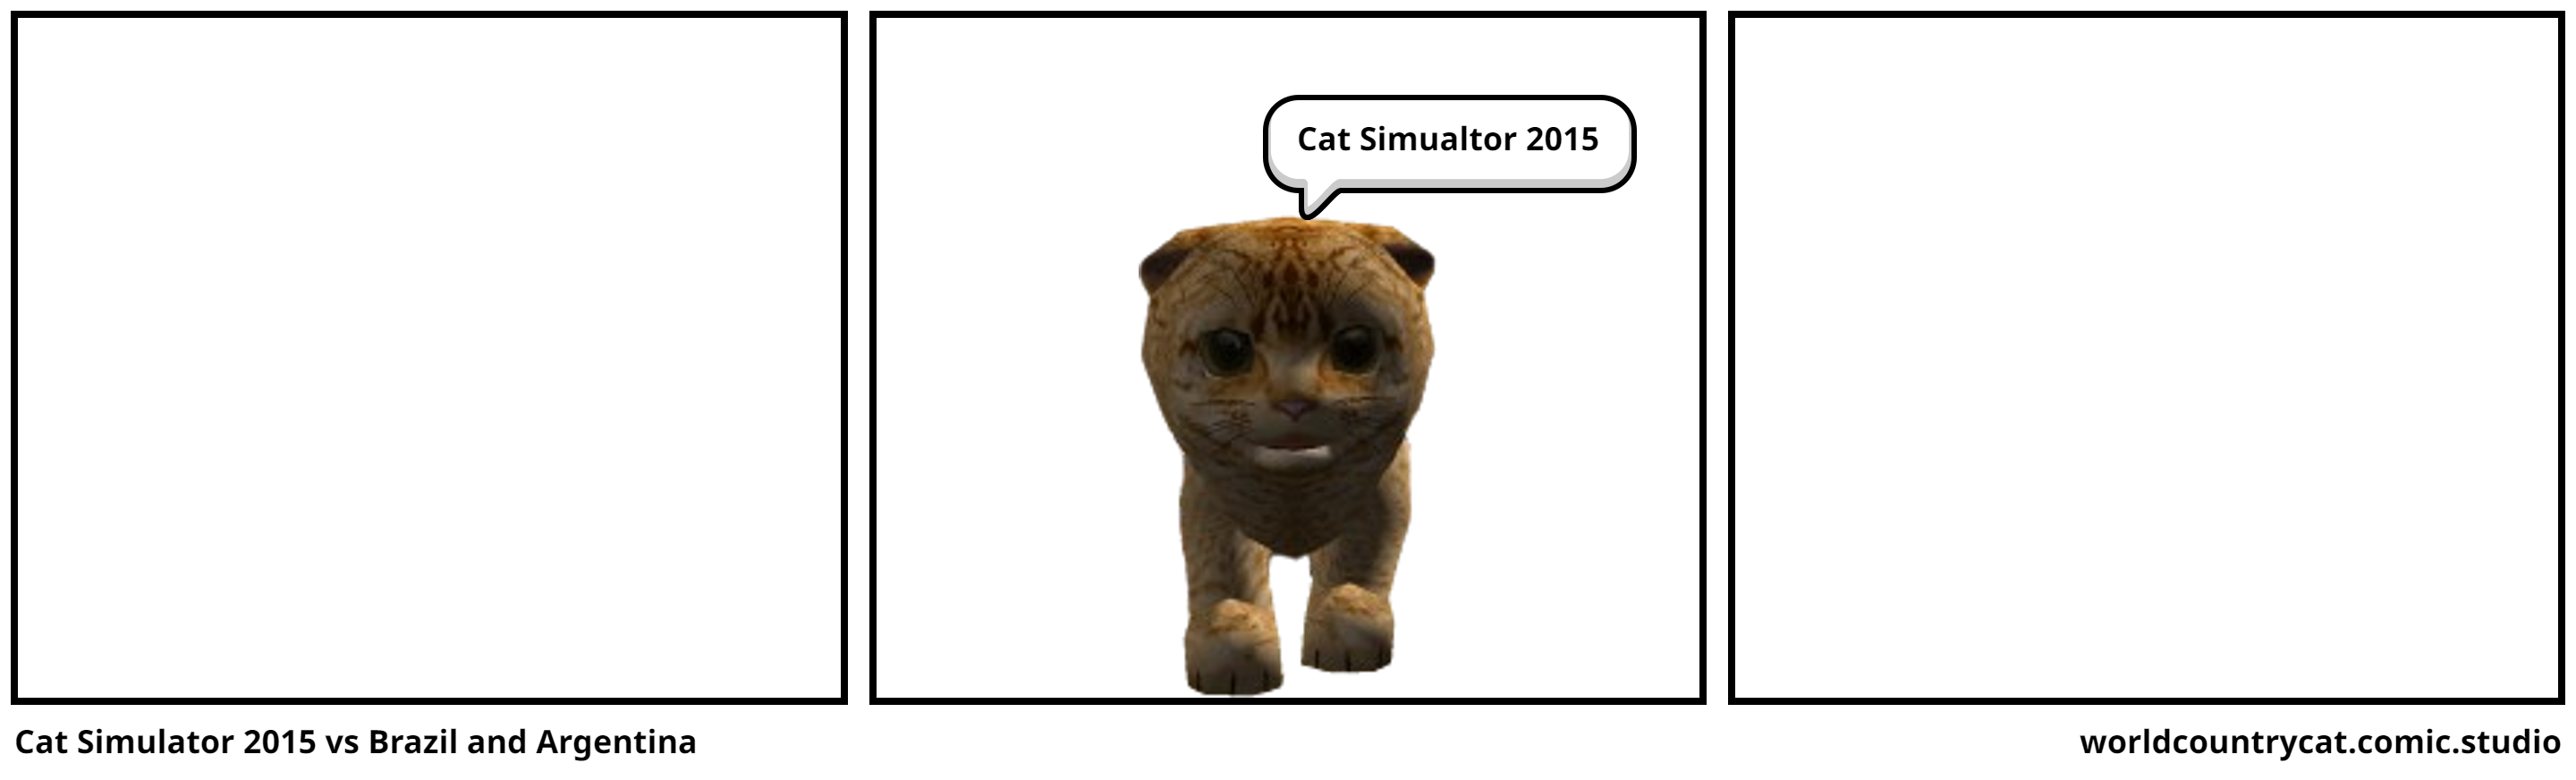 Cat Simulator 2015 vs Brazil and Argentina